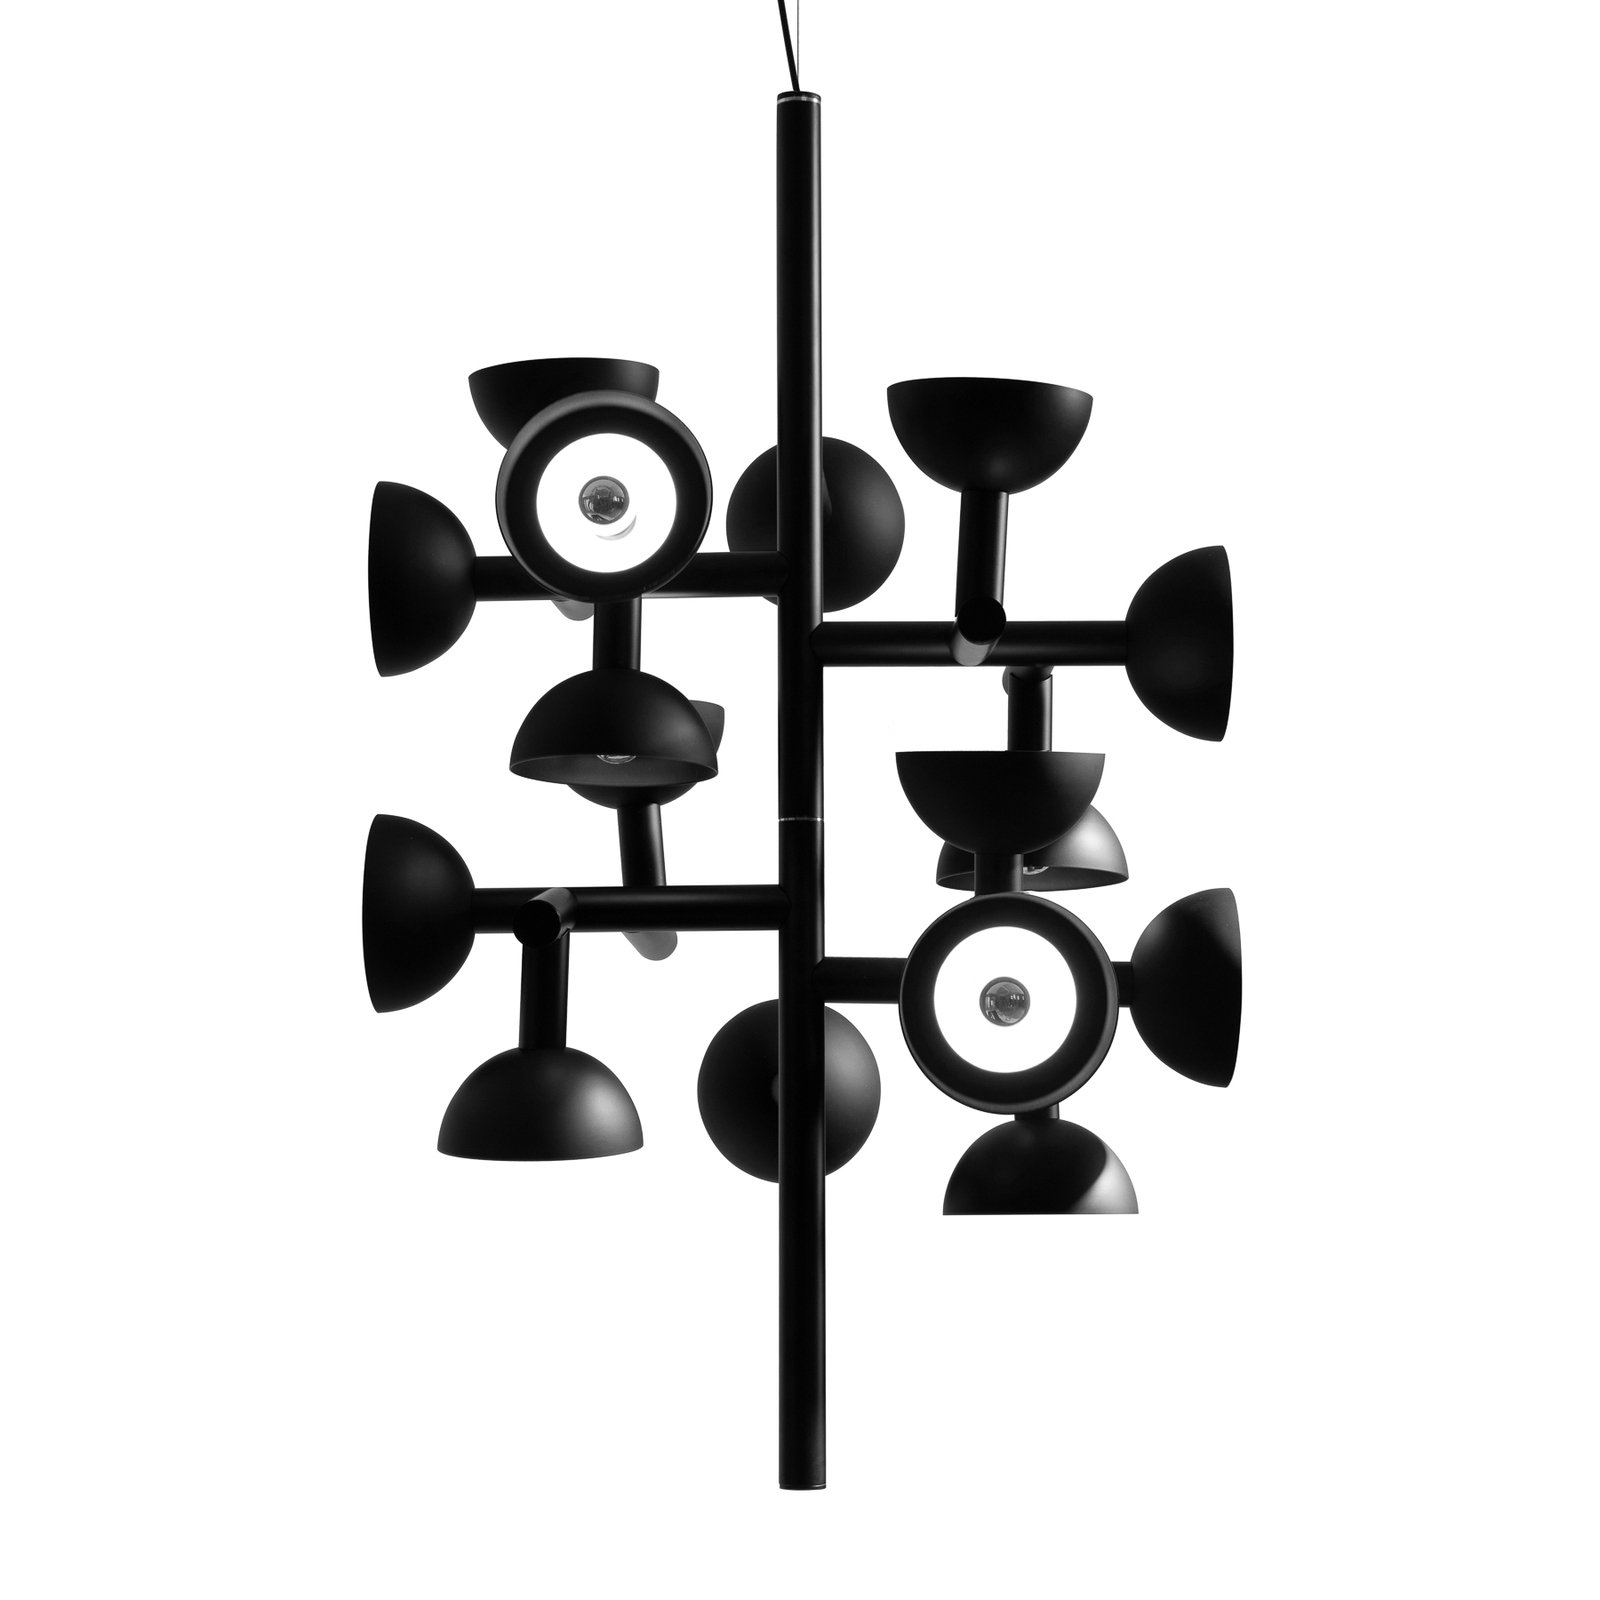 Karman Sibilla hanglamp 16-lamps zwart